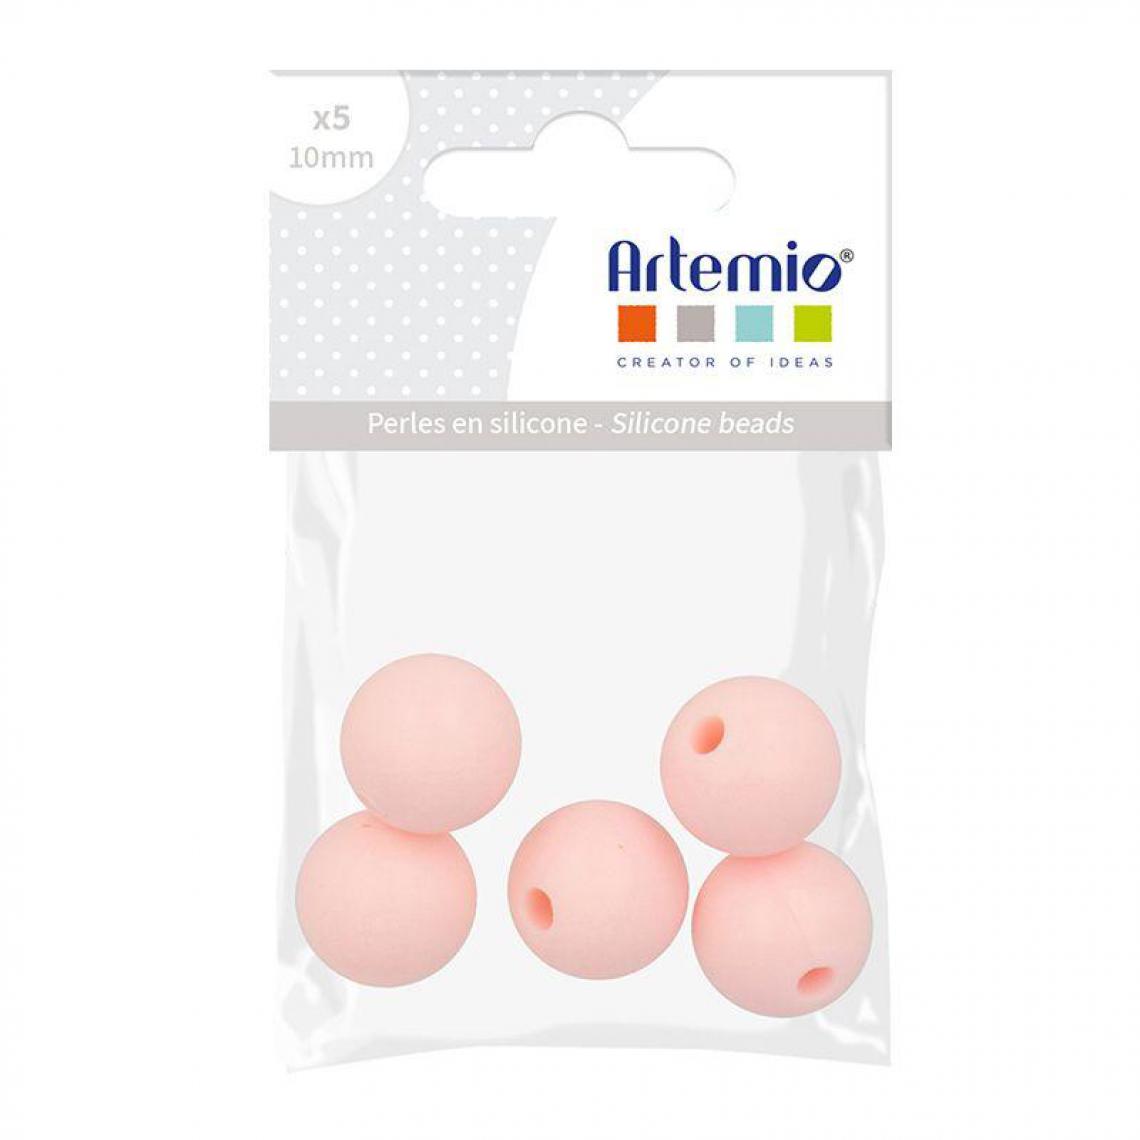 Artemio - 5 perles silicone rondes - 10 mm - rose poudré - Perles